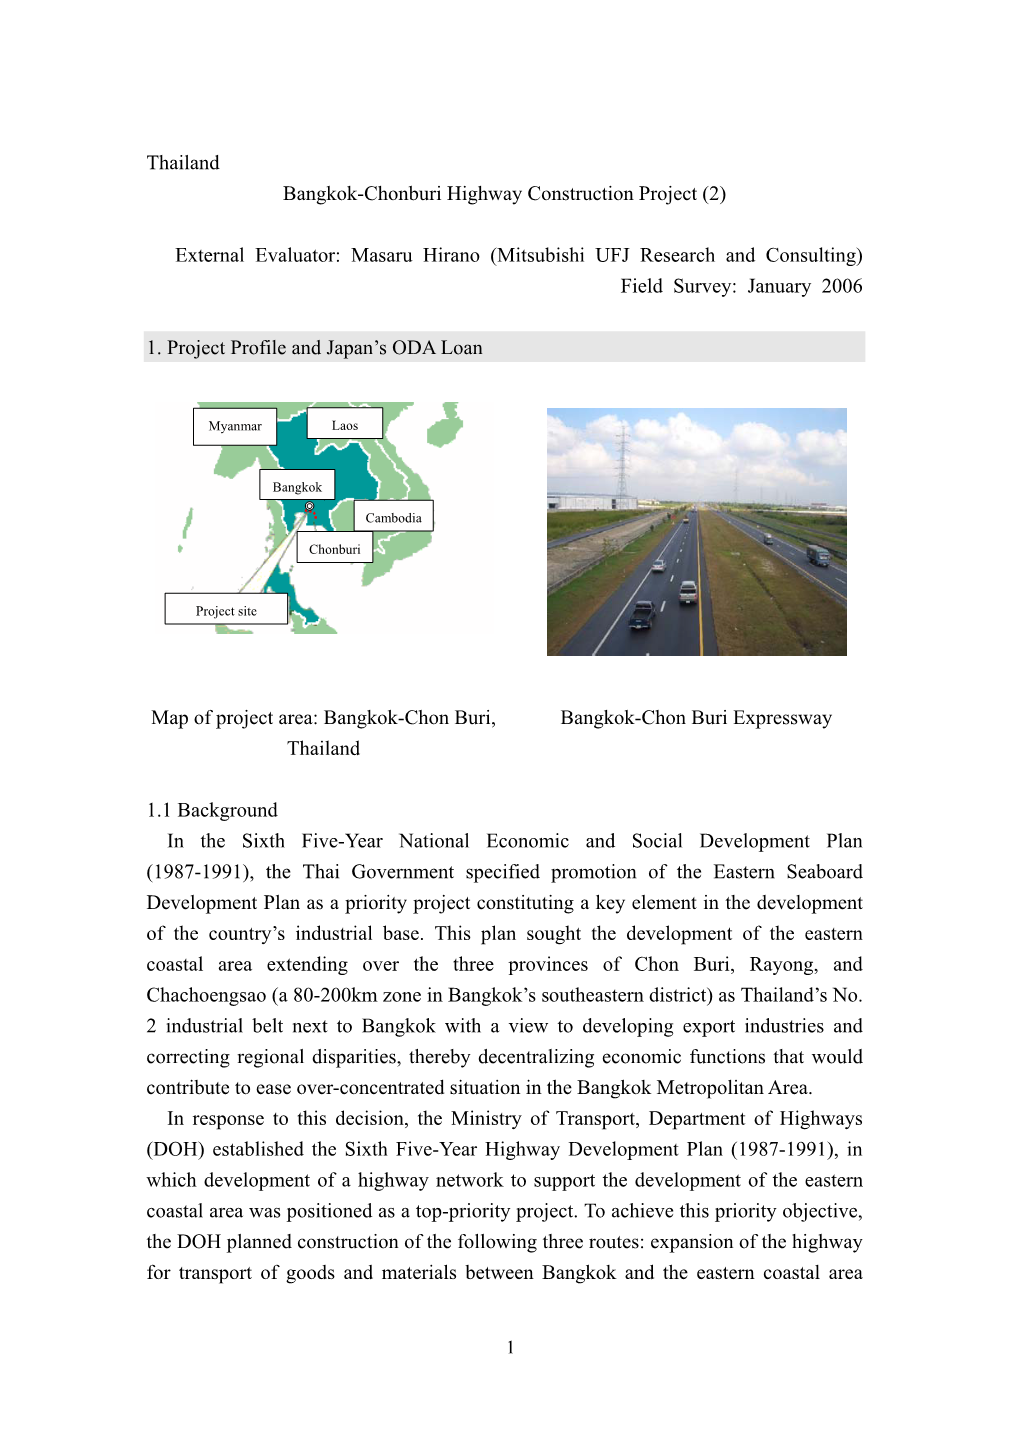 Thailand Bangkok-Chonburi Highway Construction Project (2) External Evaluator: Masaru Hirano (Mitsubishi UFJ Research and Consul